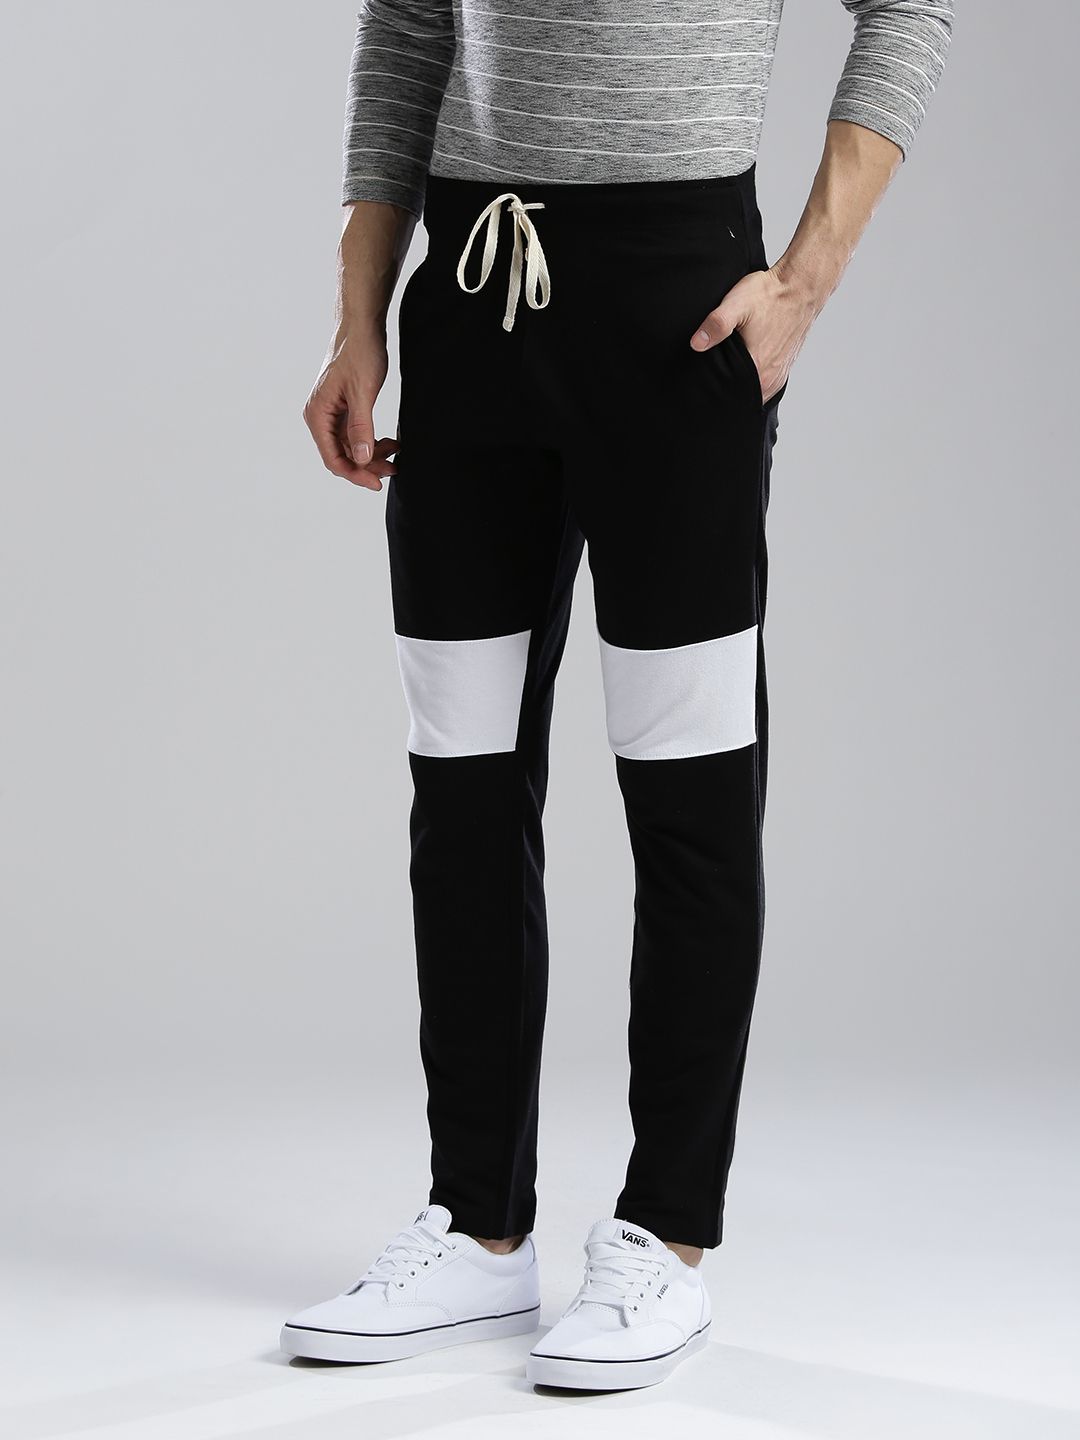 Buy Jet Black Track Pants for Men by Hubberholme Online | Ajio.com